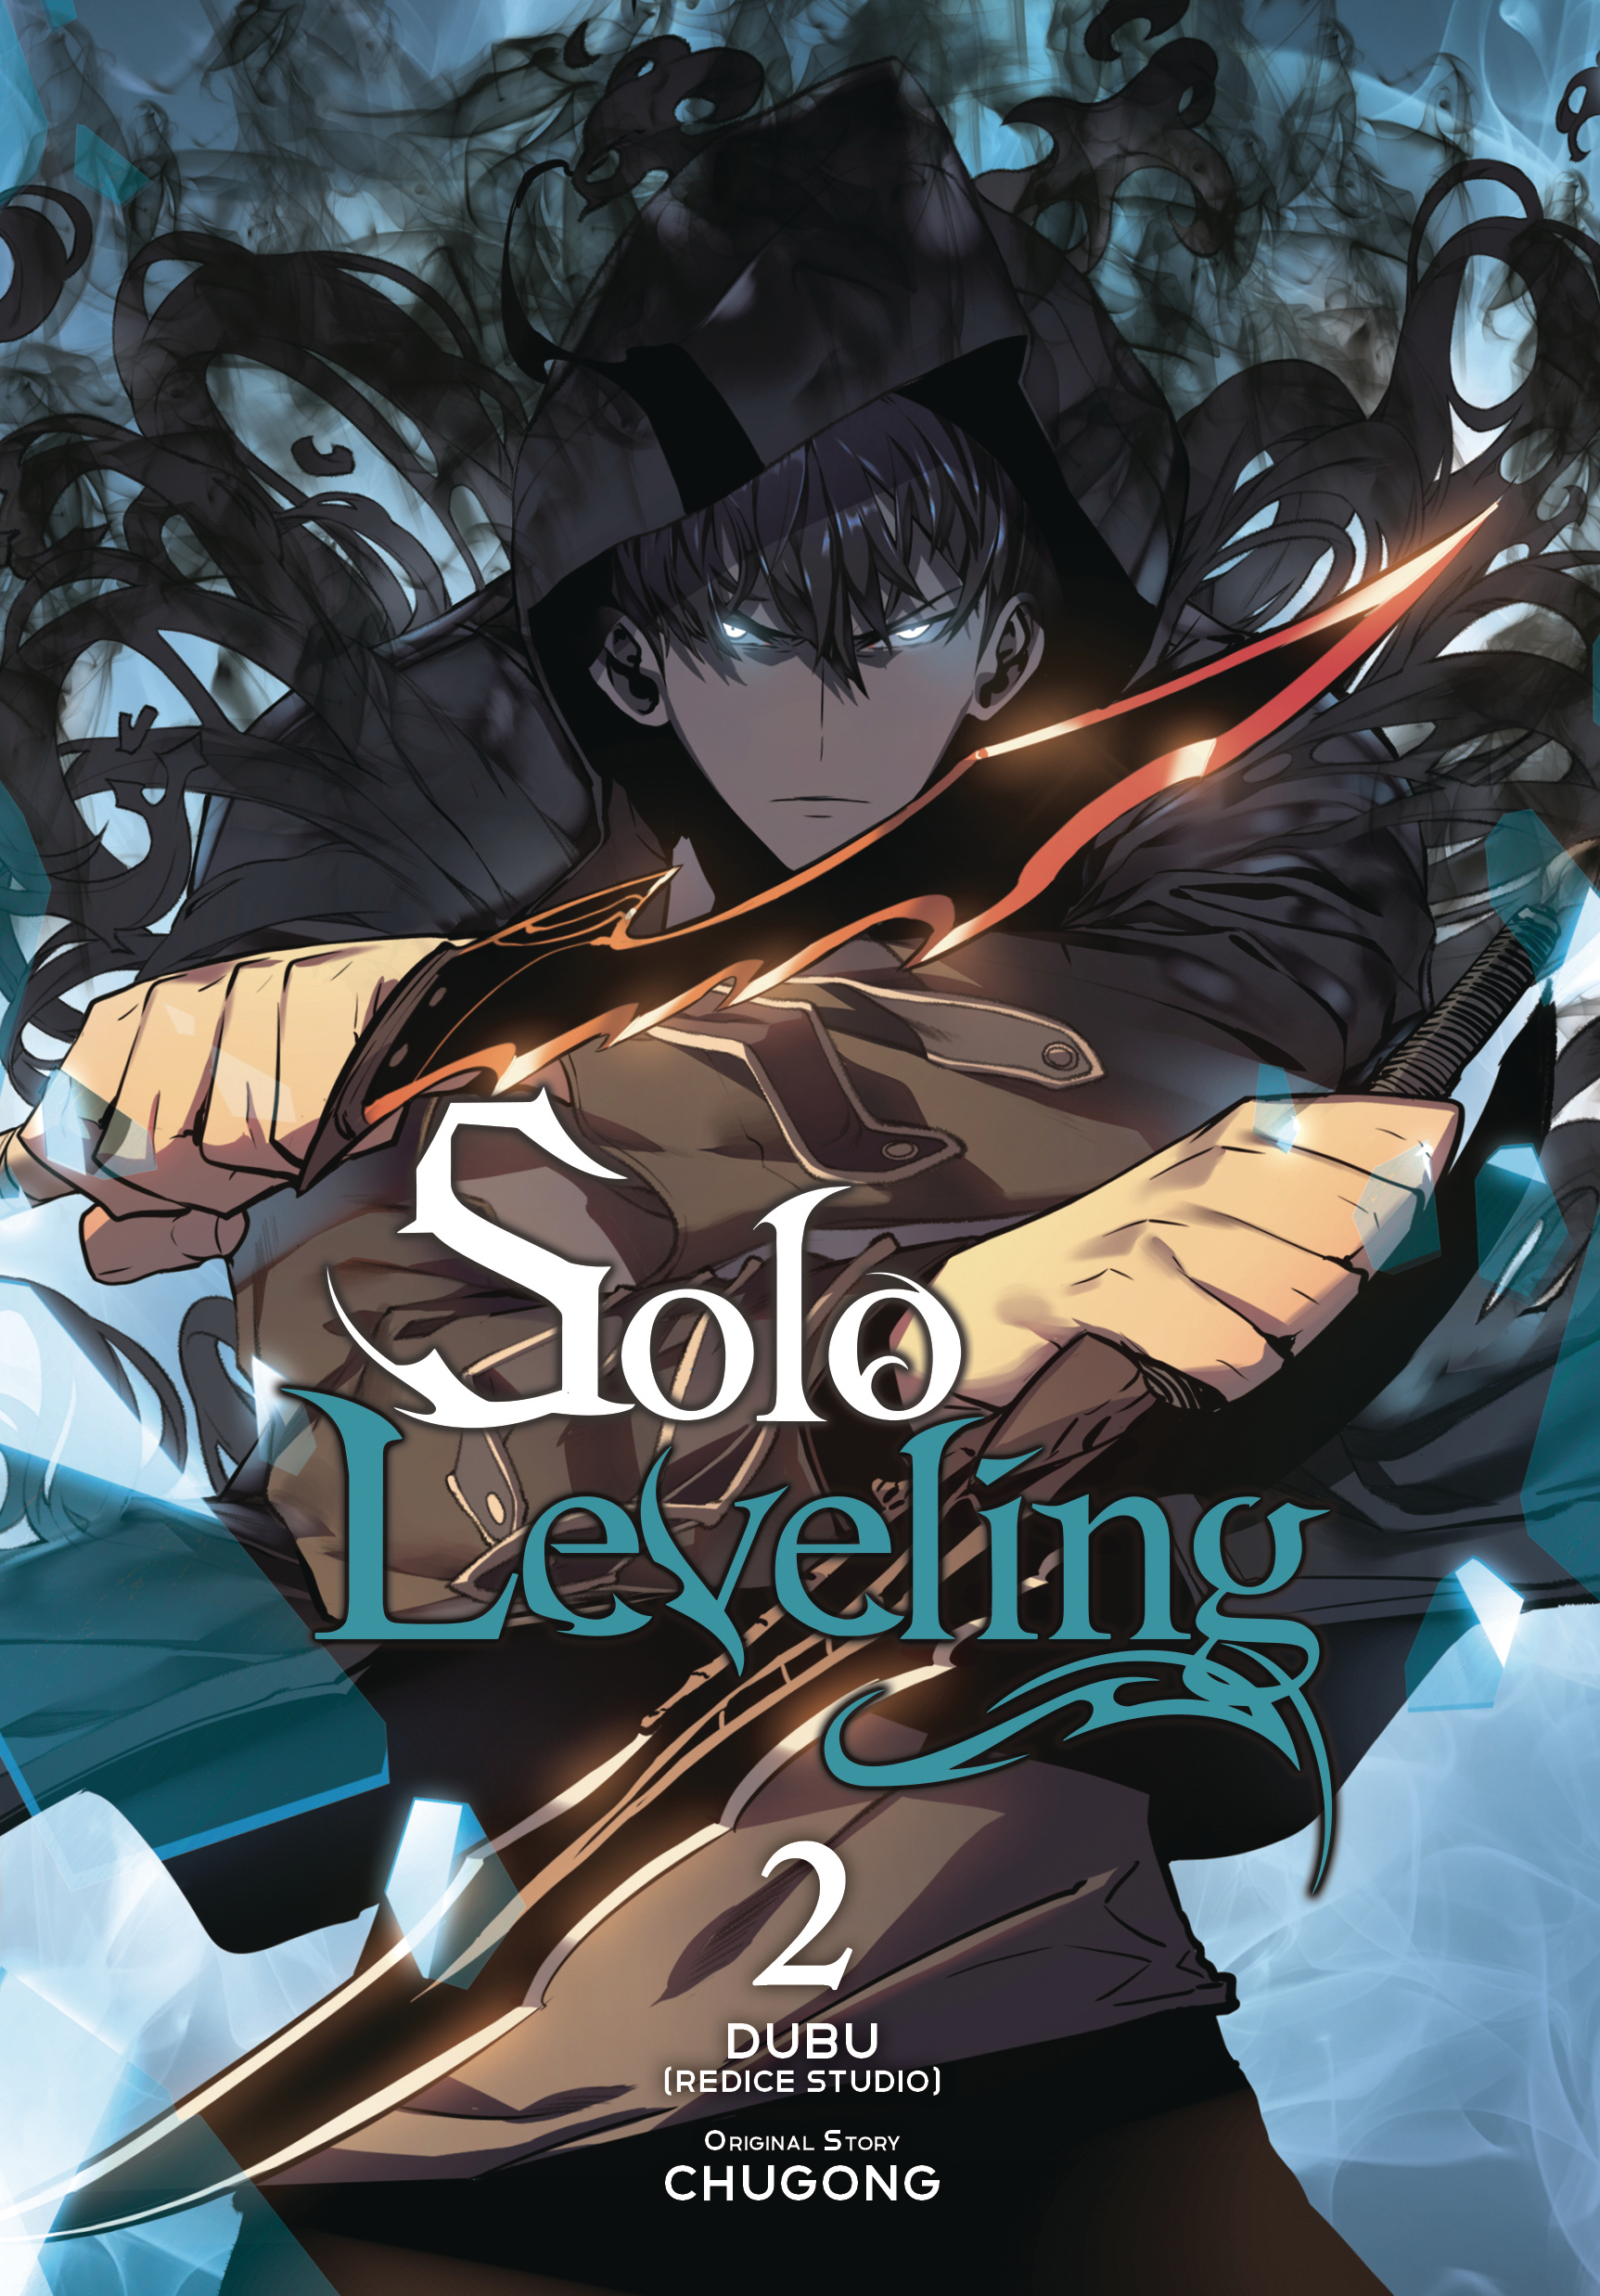 Solo Leveling Manga Volume 2 (Mature)